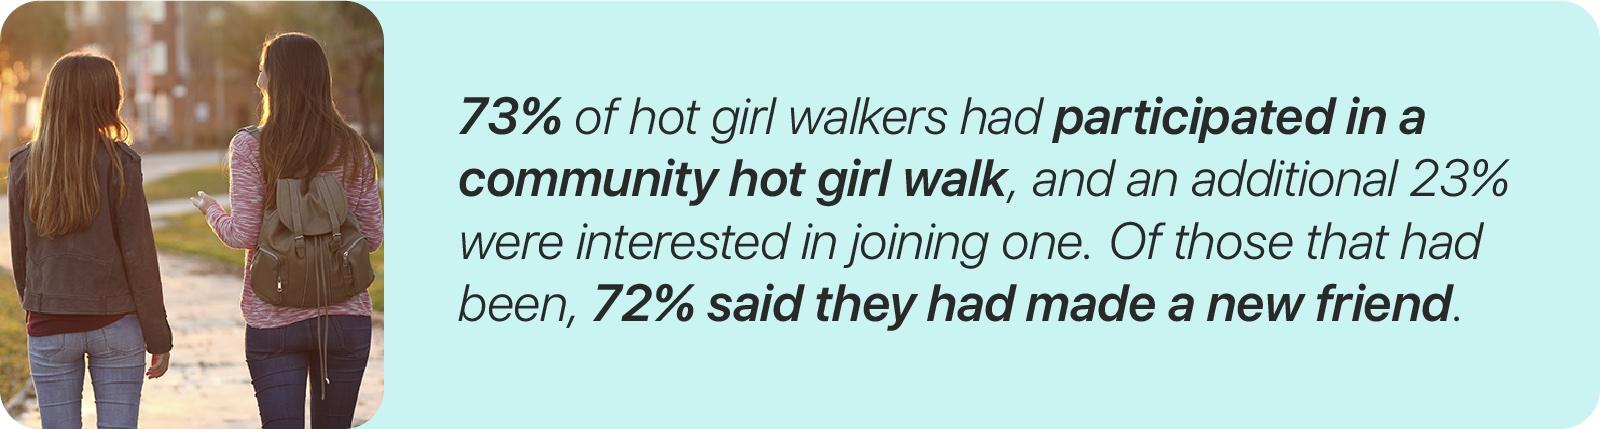 community hot pige gåture